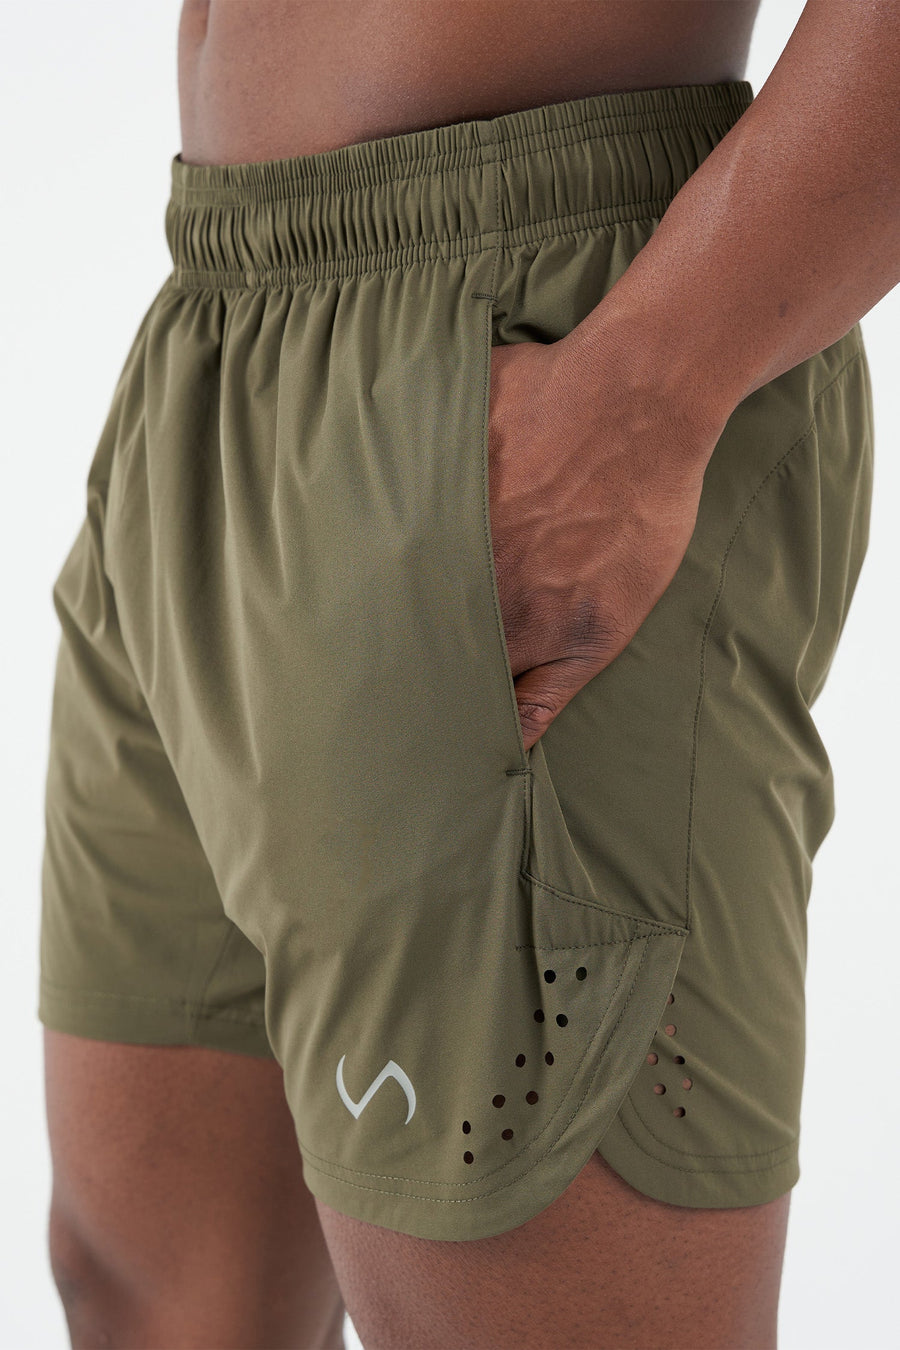 TLF Element 5” Shorts - Men’s 5 Inch inseam Shorts – Army Green - 4